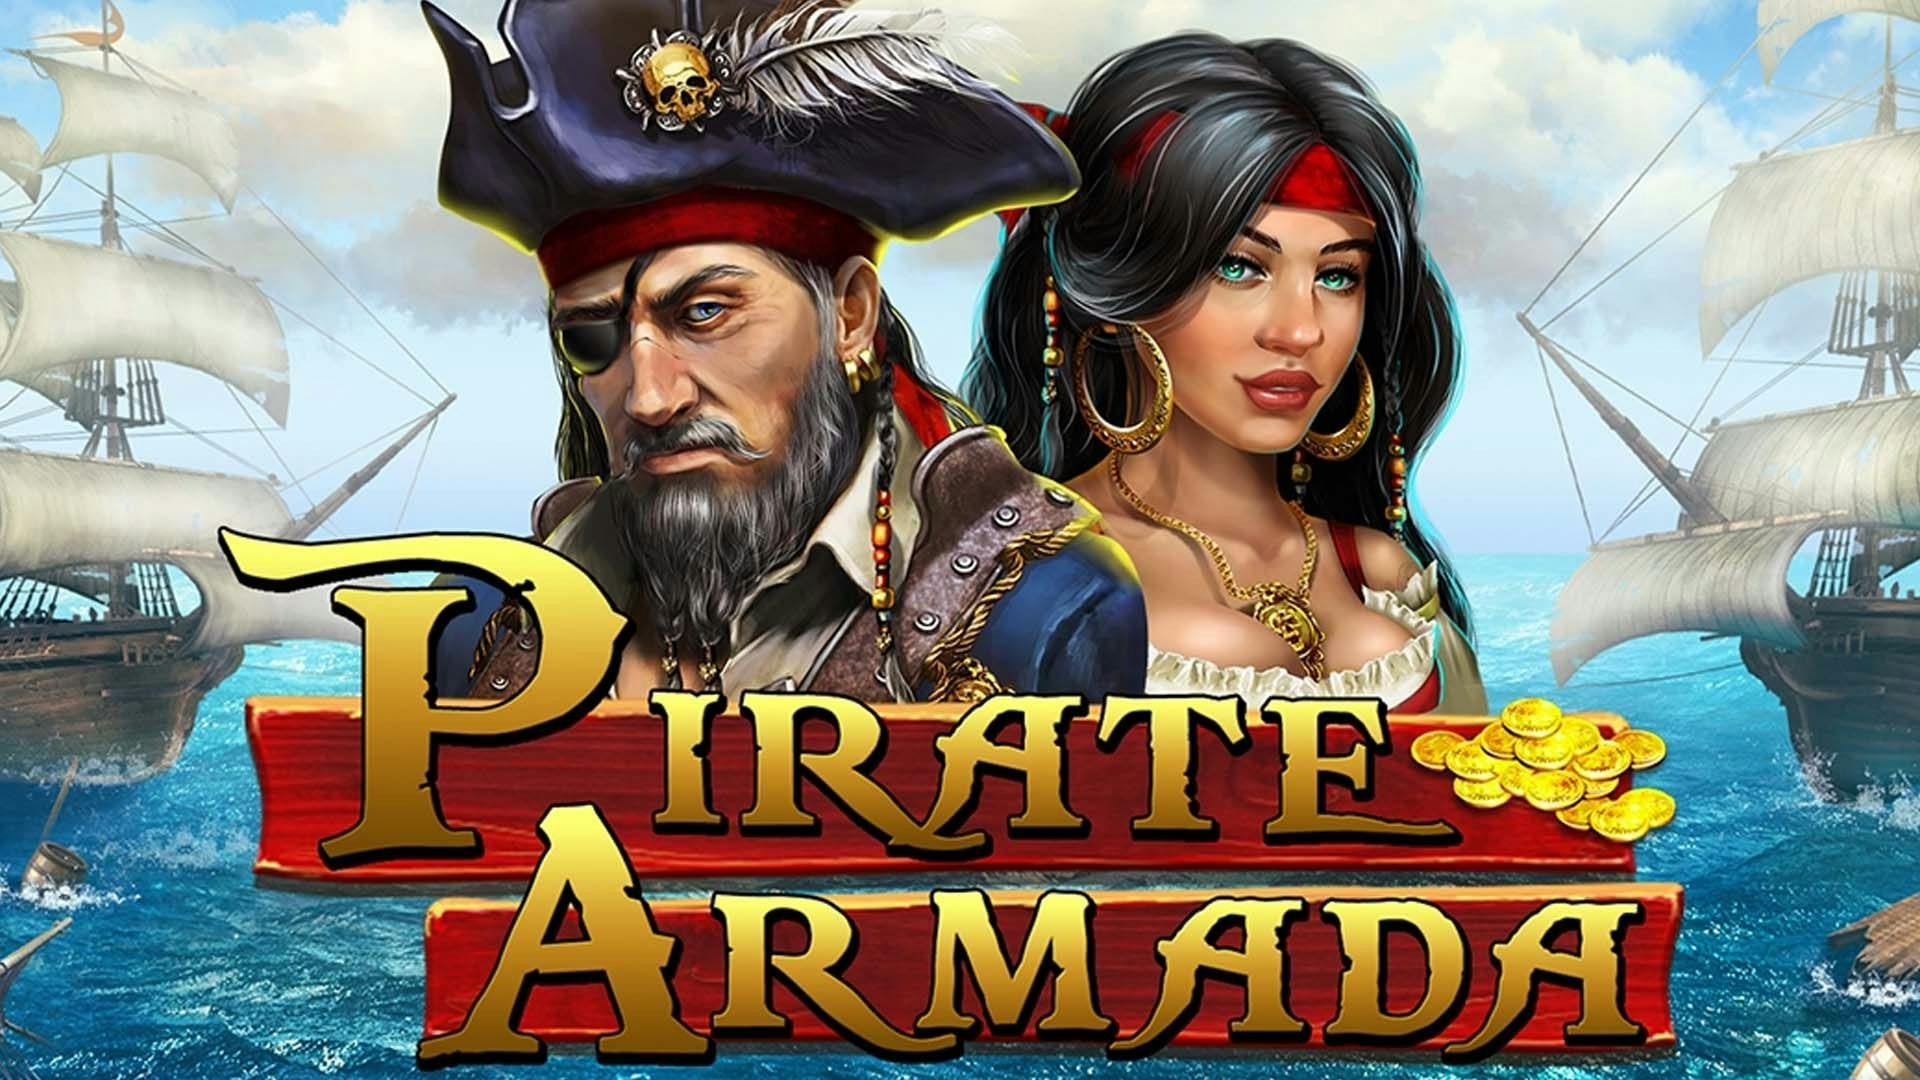 Pirate Armada Slot Machine Online Free Game Play